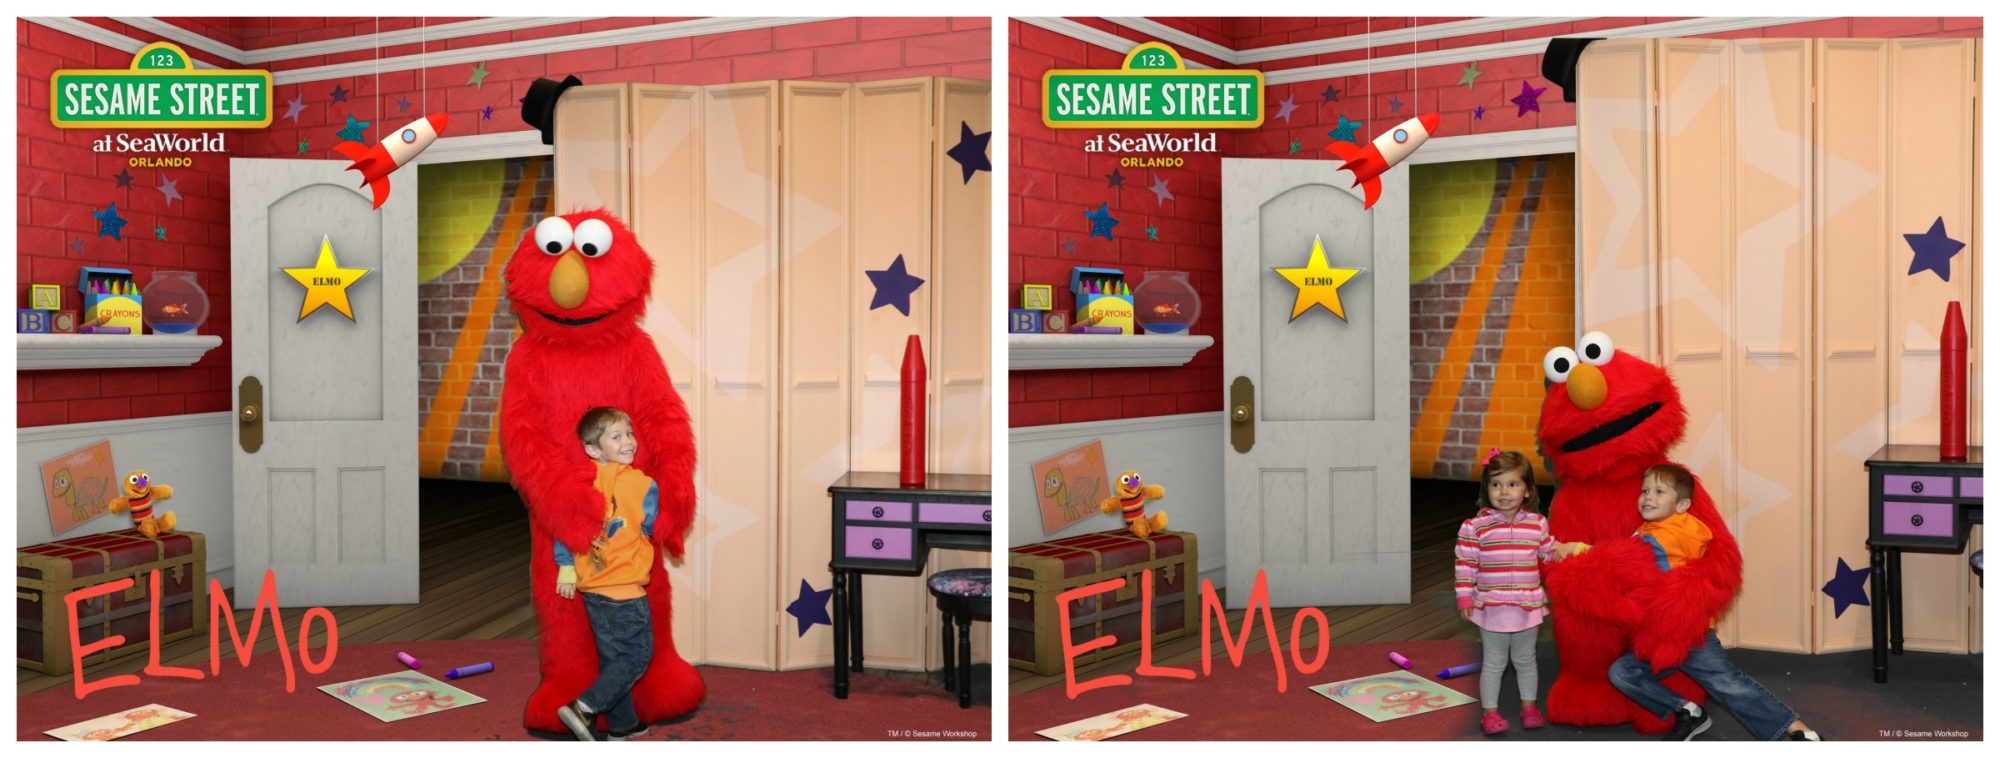 SESAME STREET AT SEAWORLD ORLANDO - Elmo Photos